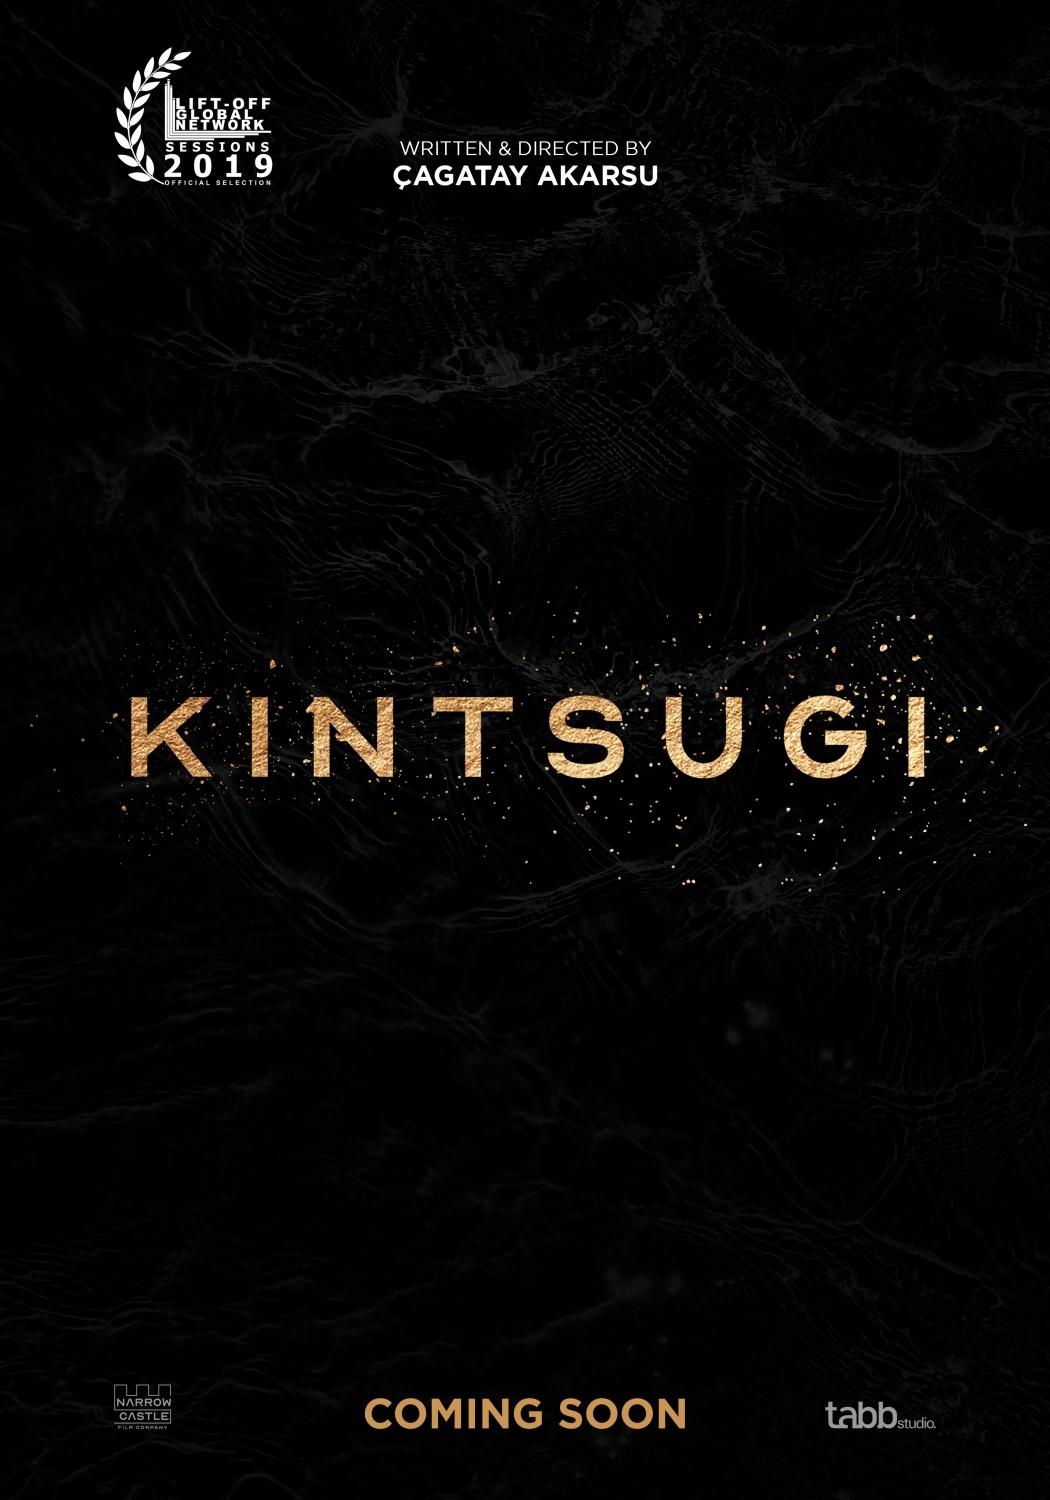 Extra Large Movie Poster Image for Kintsugi